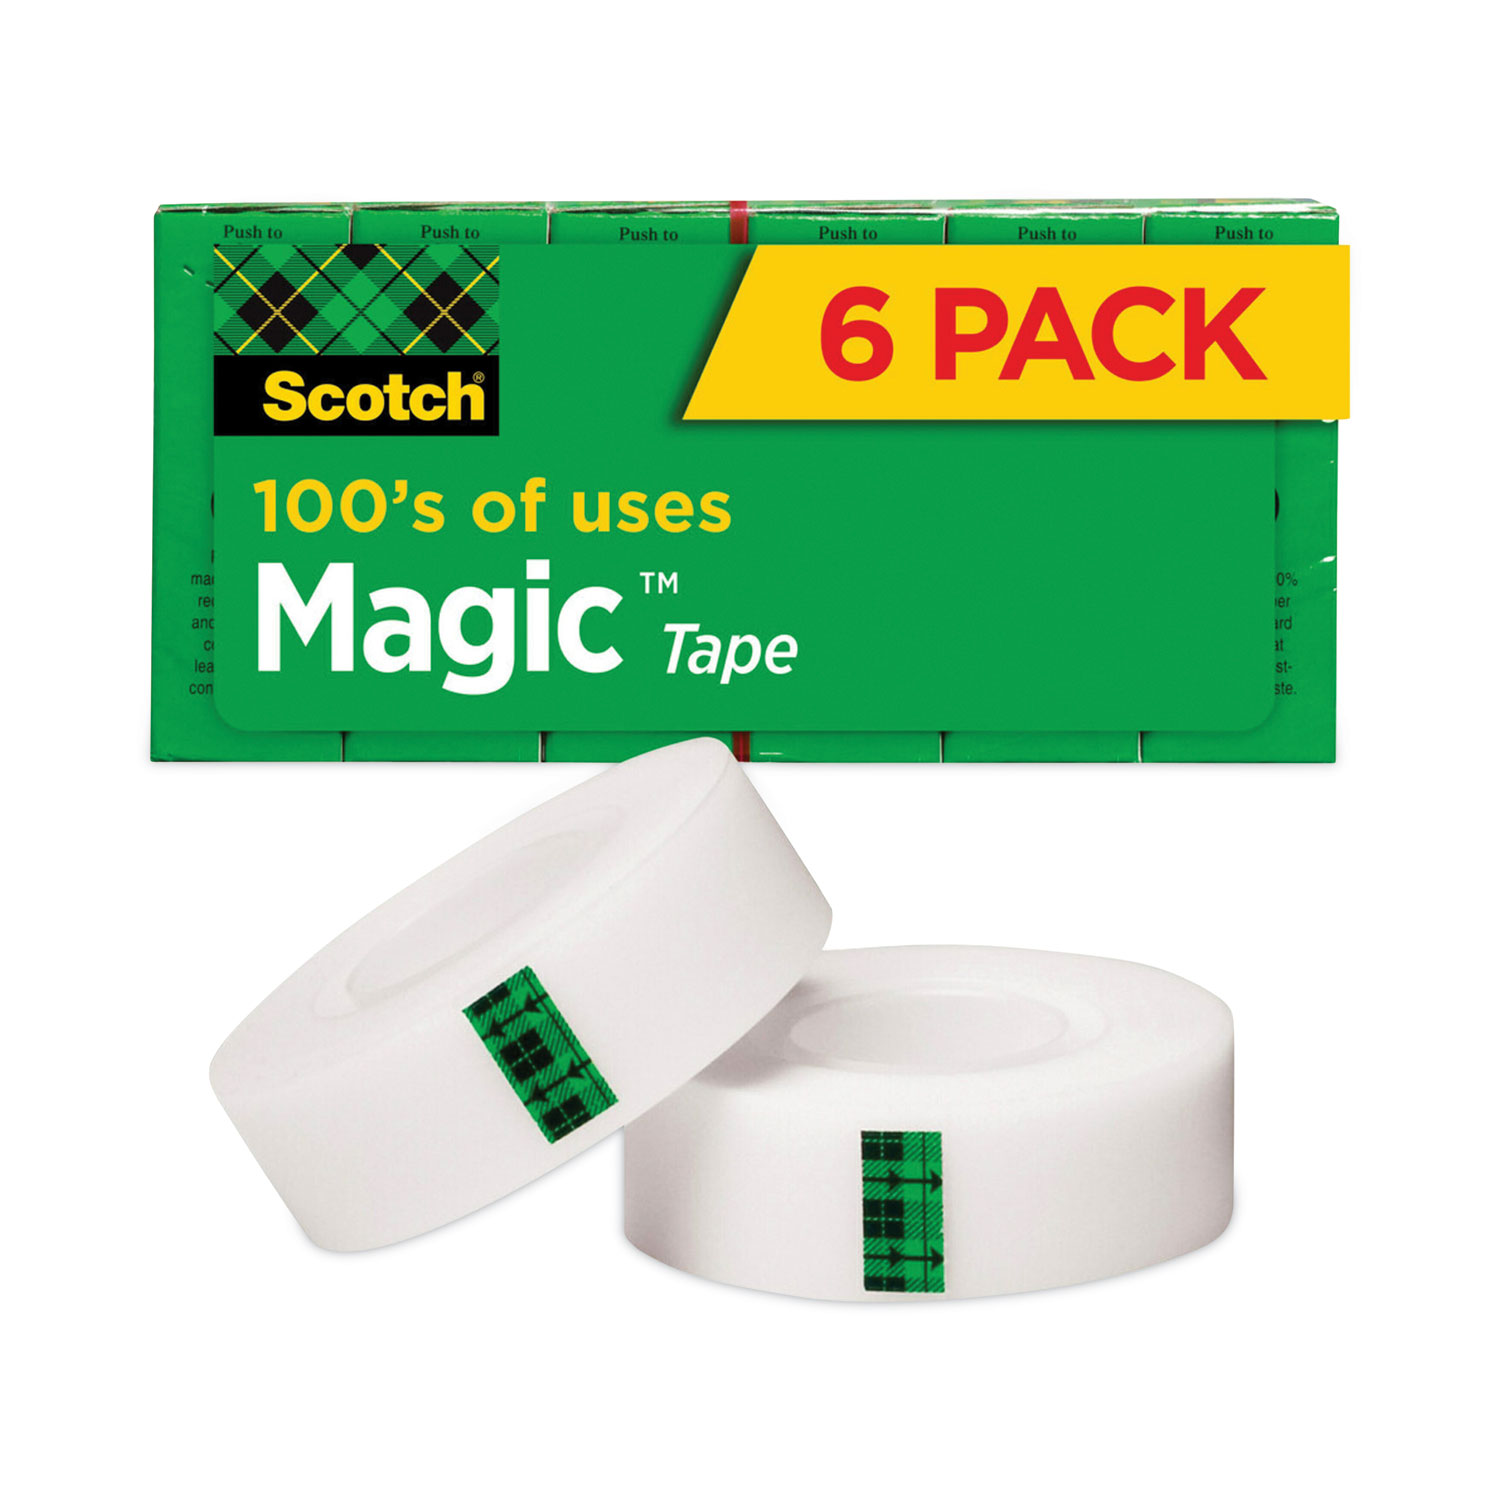 Scotch Easy-grip Packaging Tape Dispenser Refill - 2